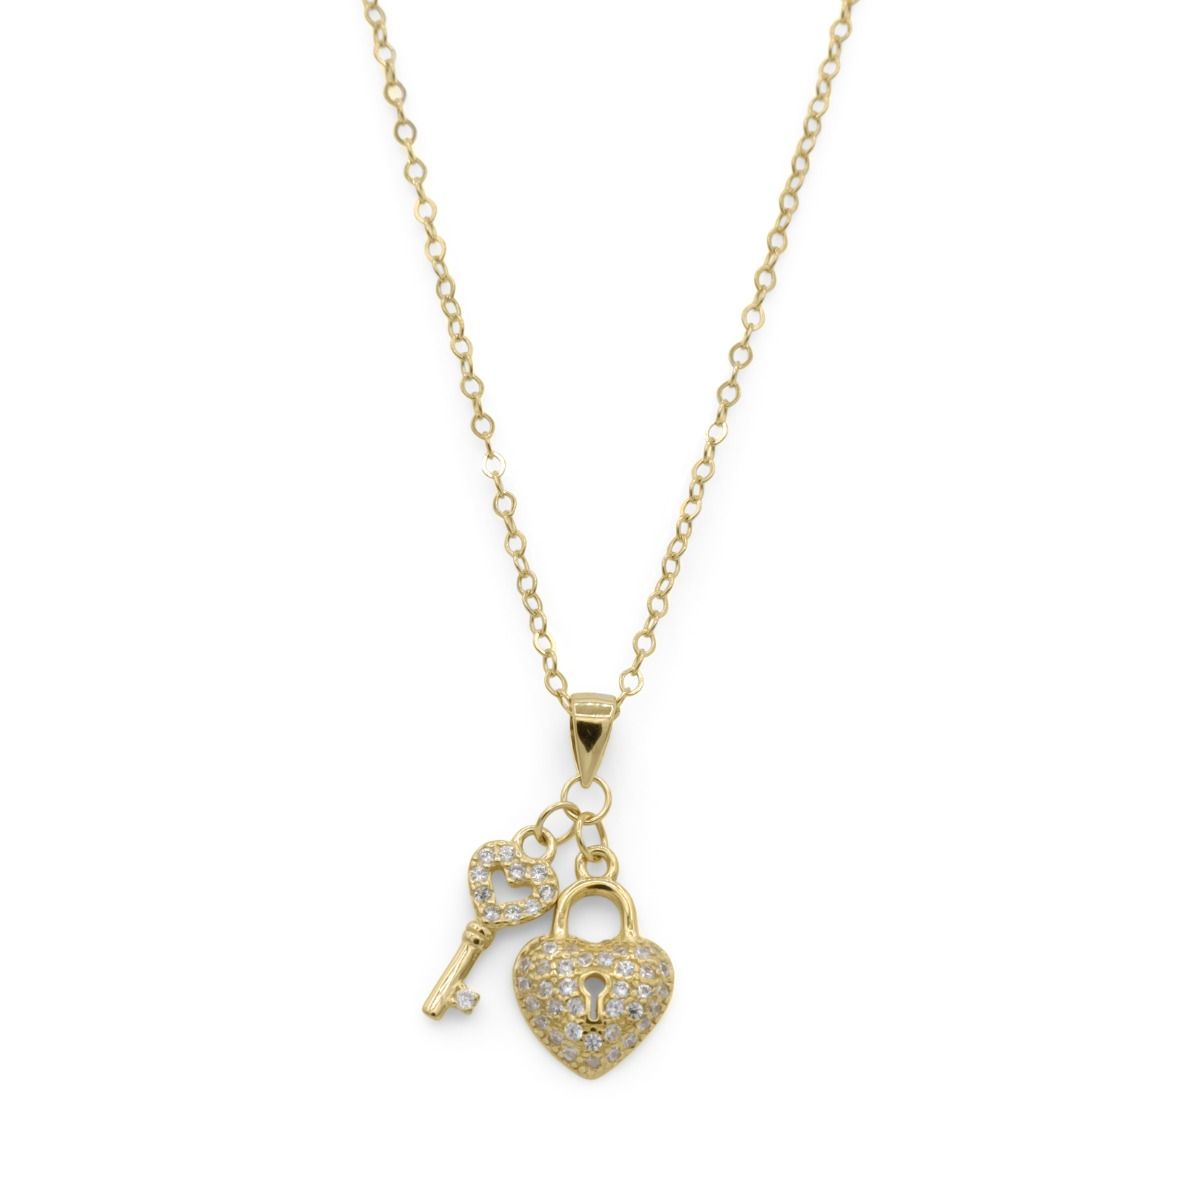 (Silver Plated) Stainless Steel, Jewelry Love Heart, Lock Bracelet, Key Pendant, Necklace Jewelry